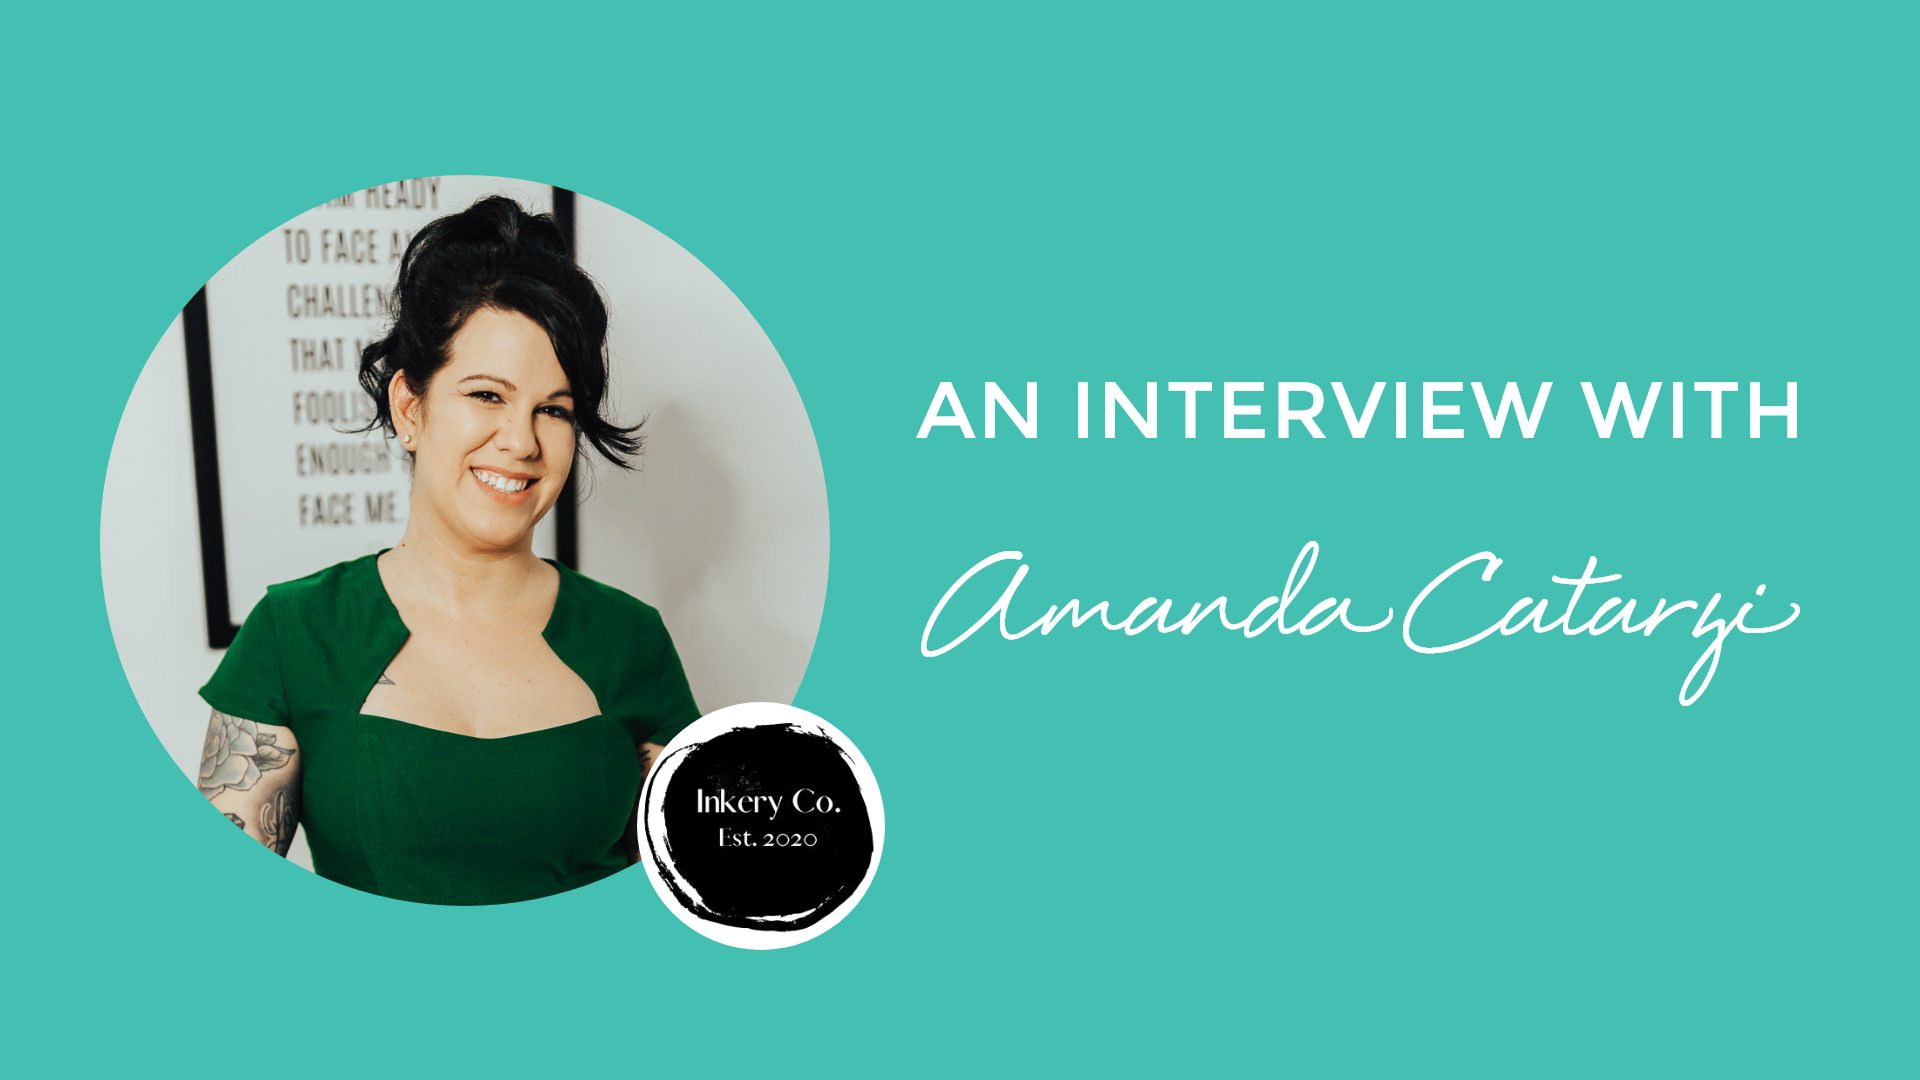 Interview with Amanda Catarzi of Inkery Co.